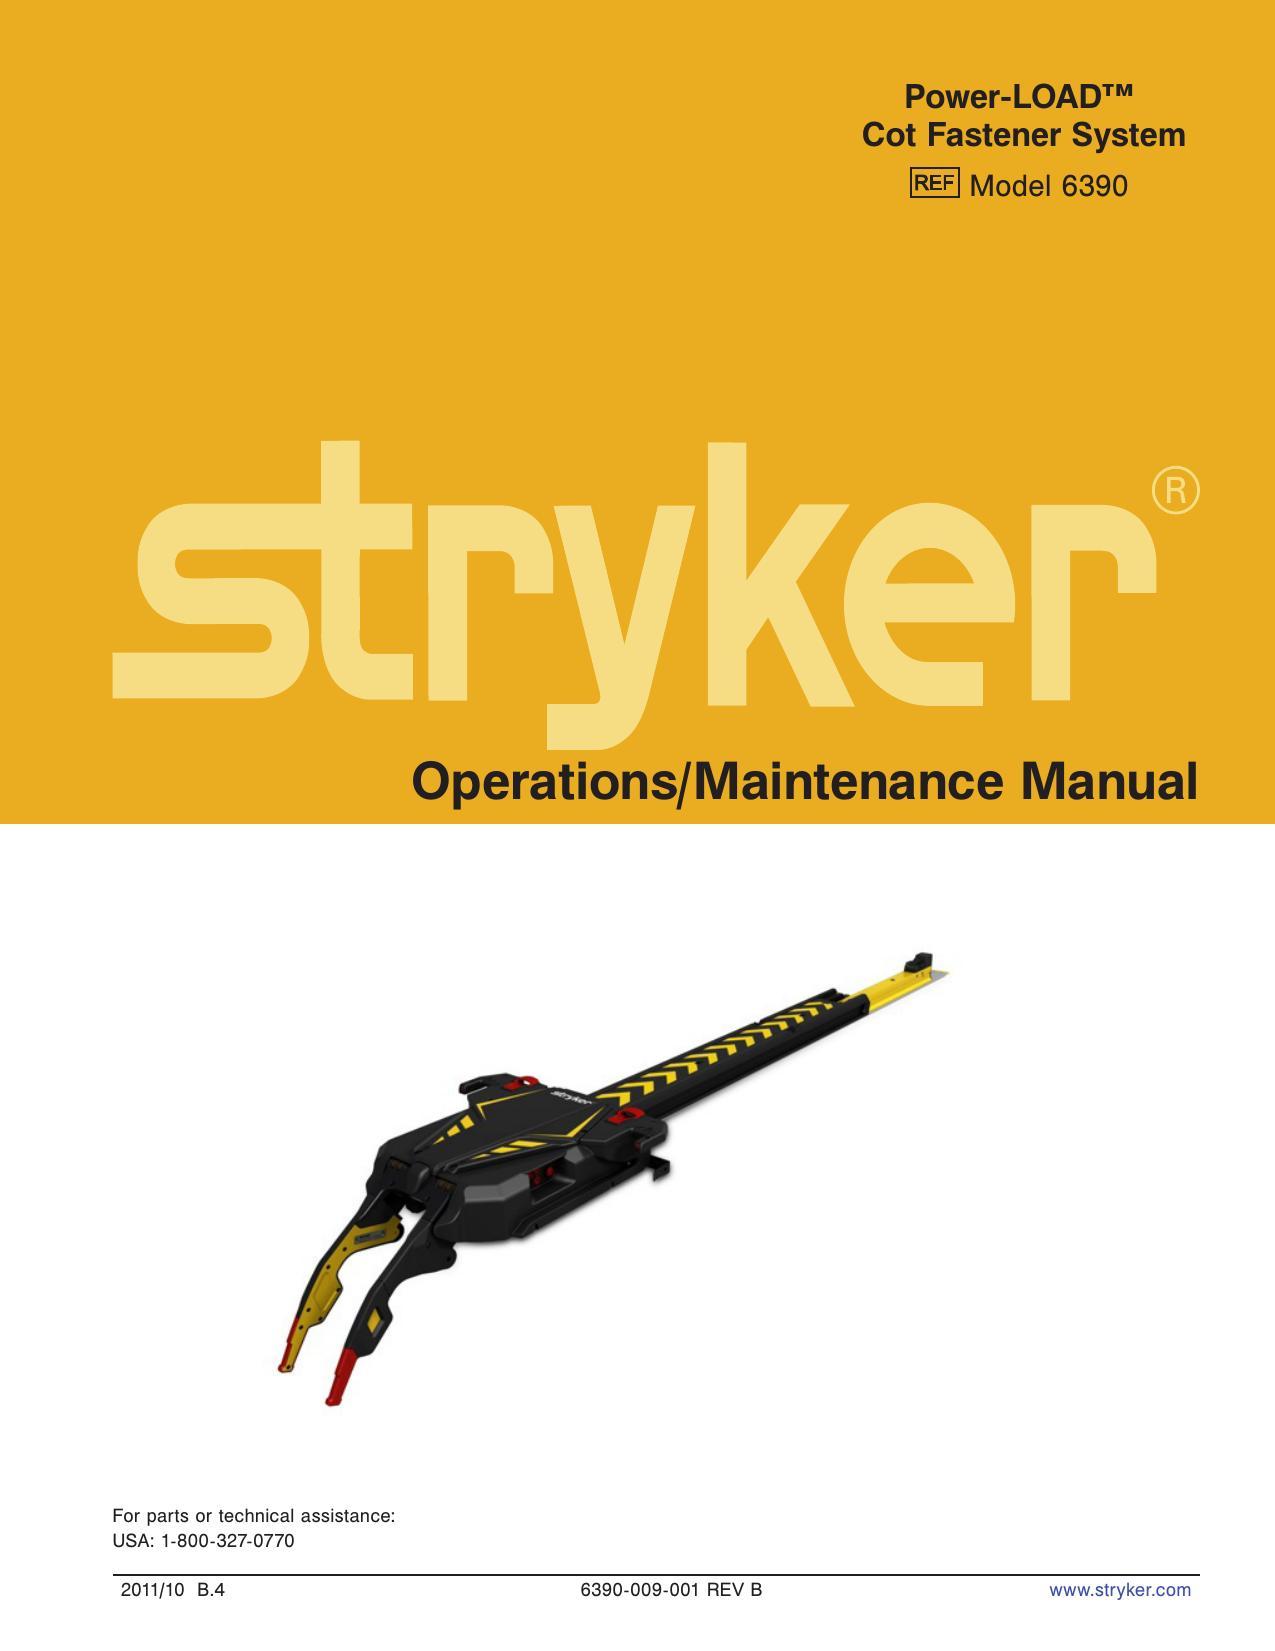 stryker-power-loadtm-cot-fastener-system-model-6390-operations-maintenance-manual.pdf